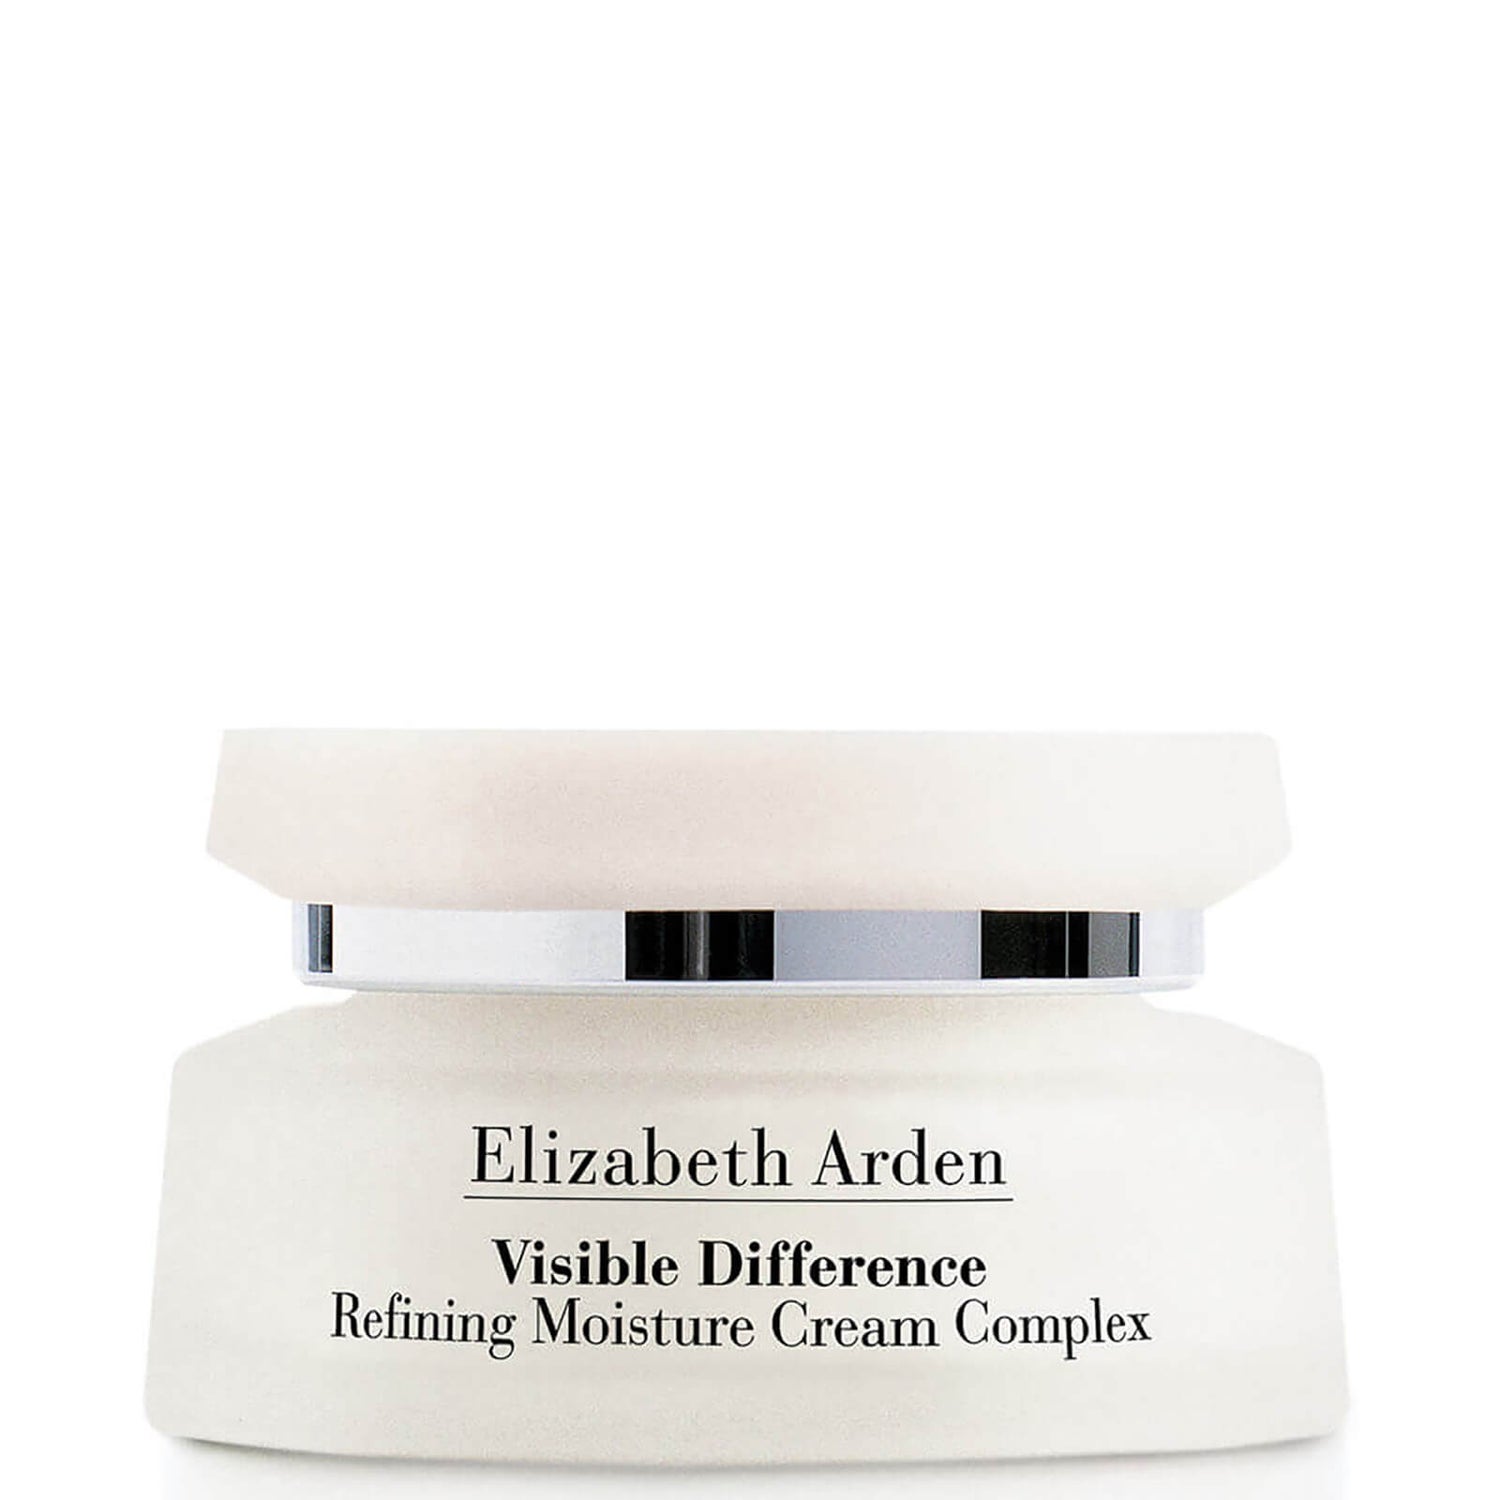 Crema hidratante Visible Difference Refining Moisture Cream de Elizabeth Arden (75 ml)